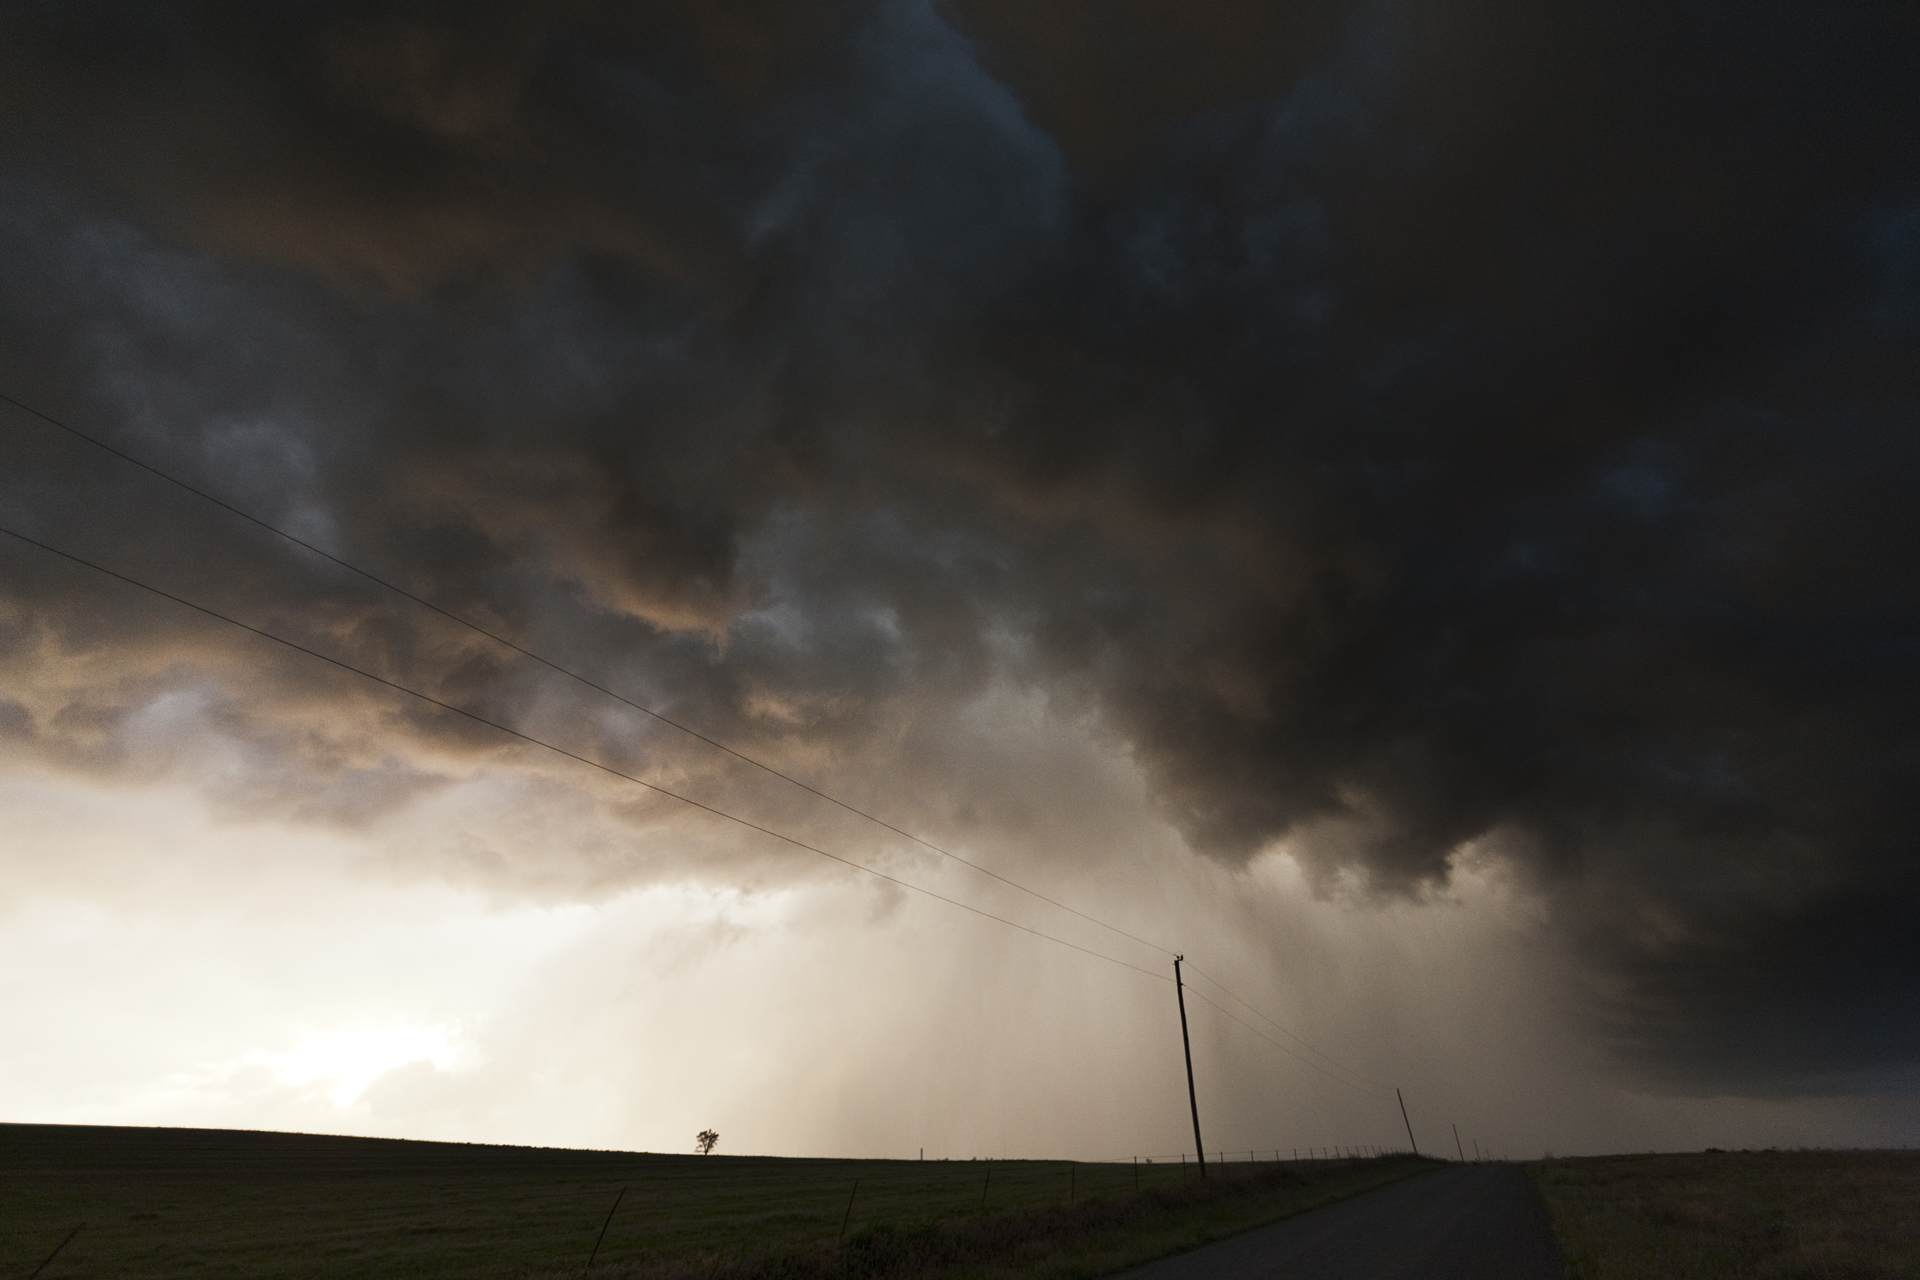 Illuminated Rain, Southern Kansas May 29, 2013 / Photo: Camille Seaman